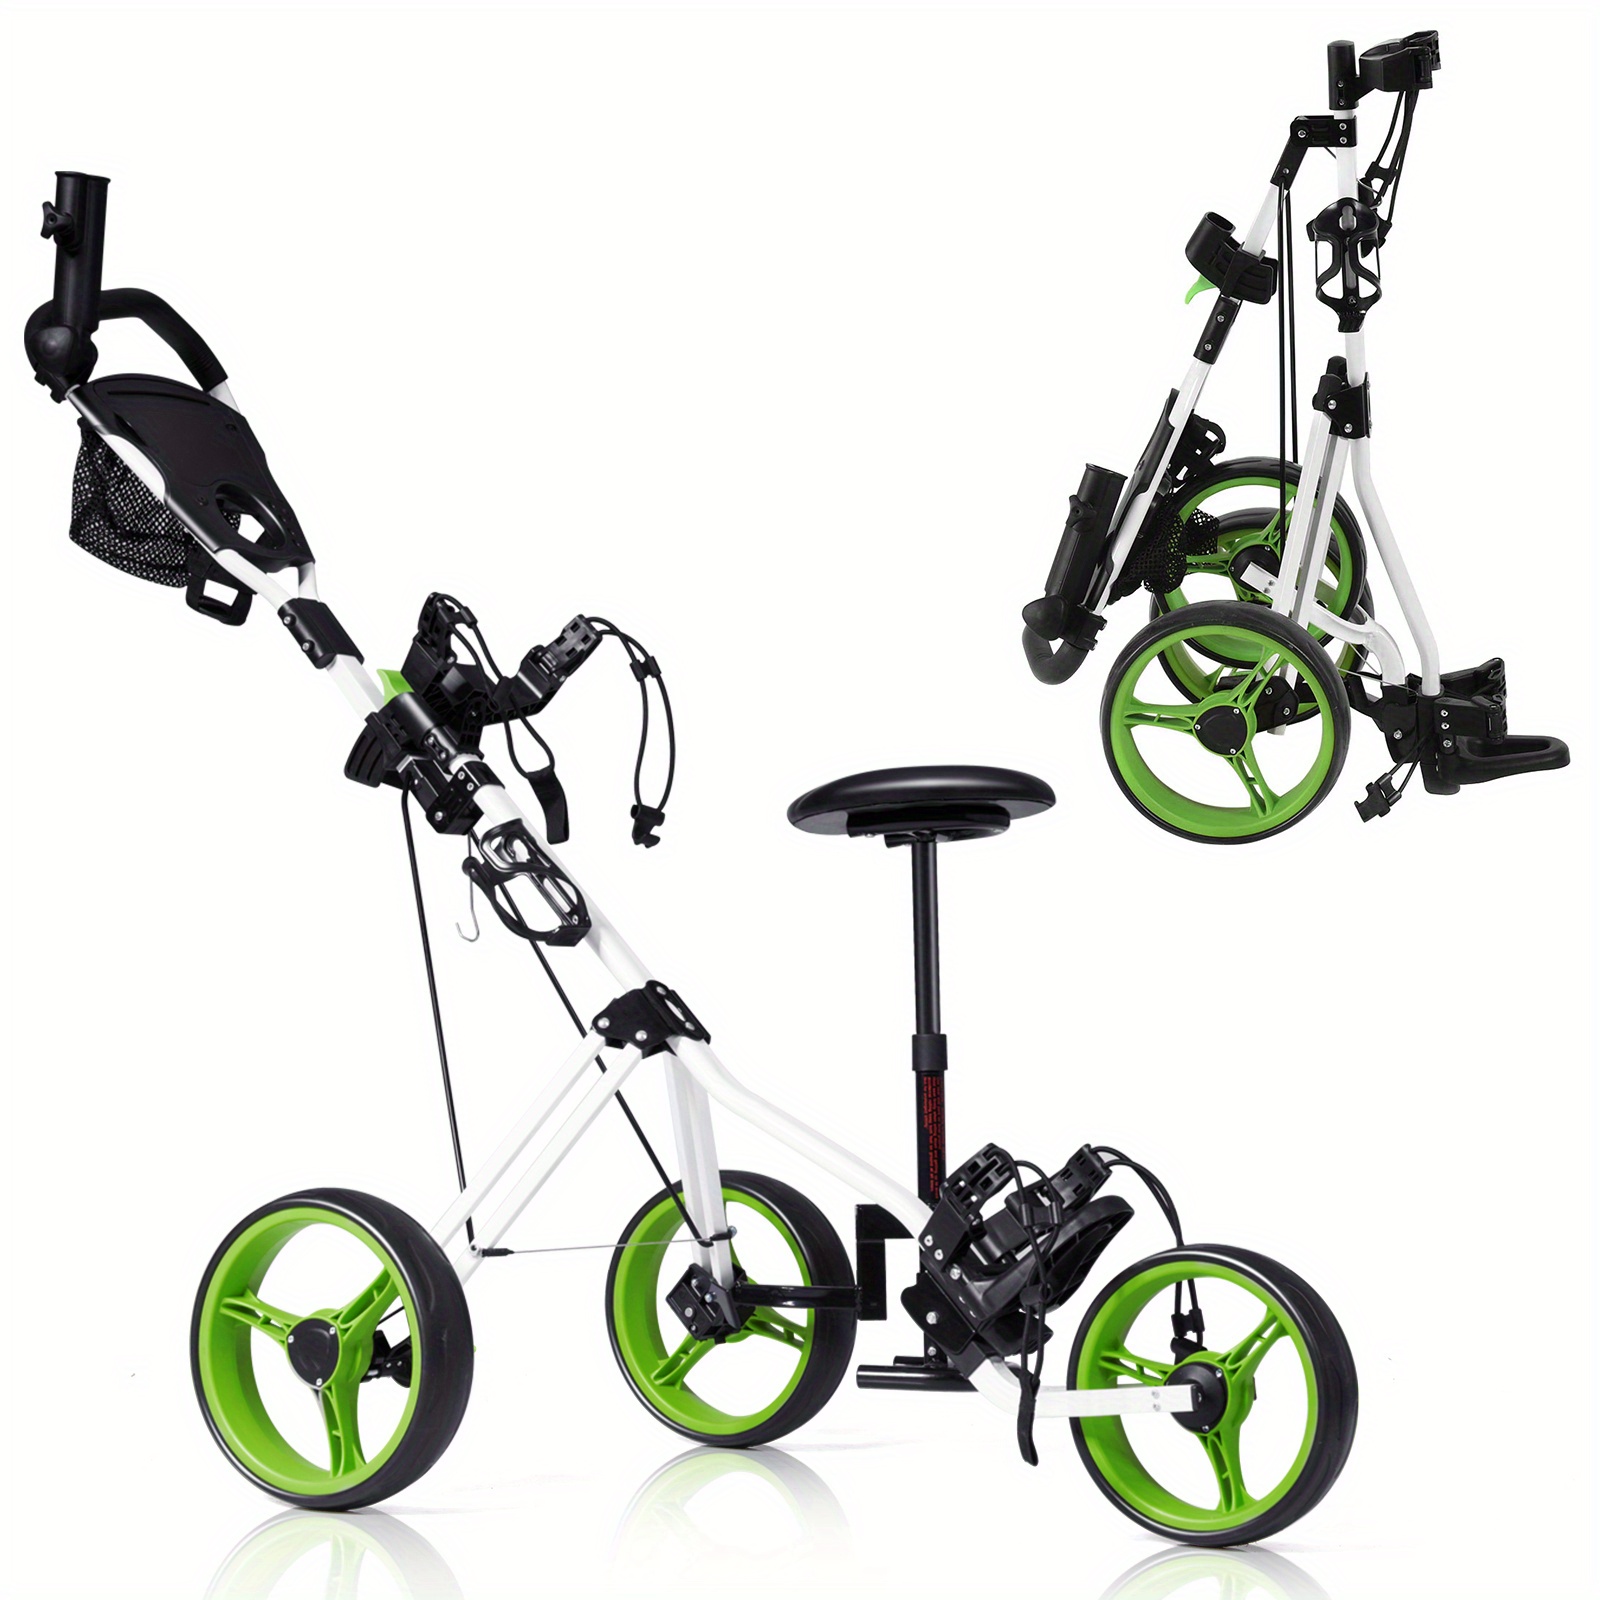 

Goplus 3 Wheel Push Pull Golf Club Cart Trolley W/seat Scoreboard Bag Swivel